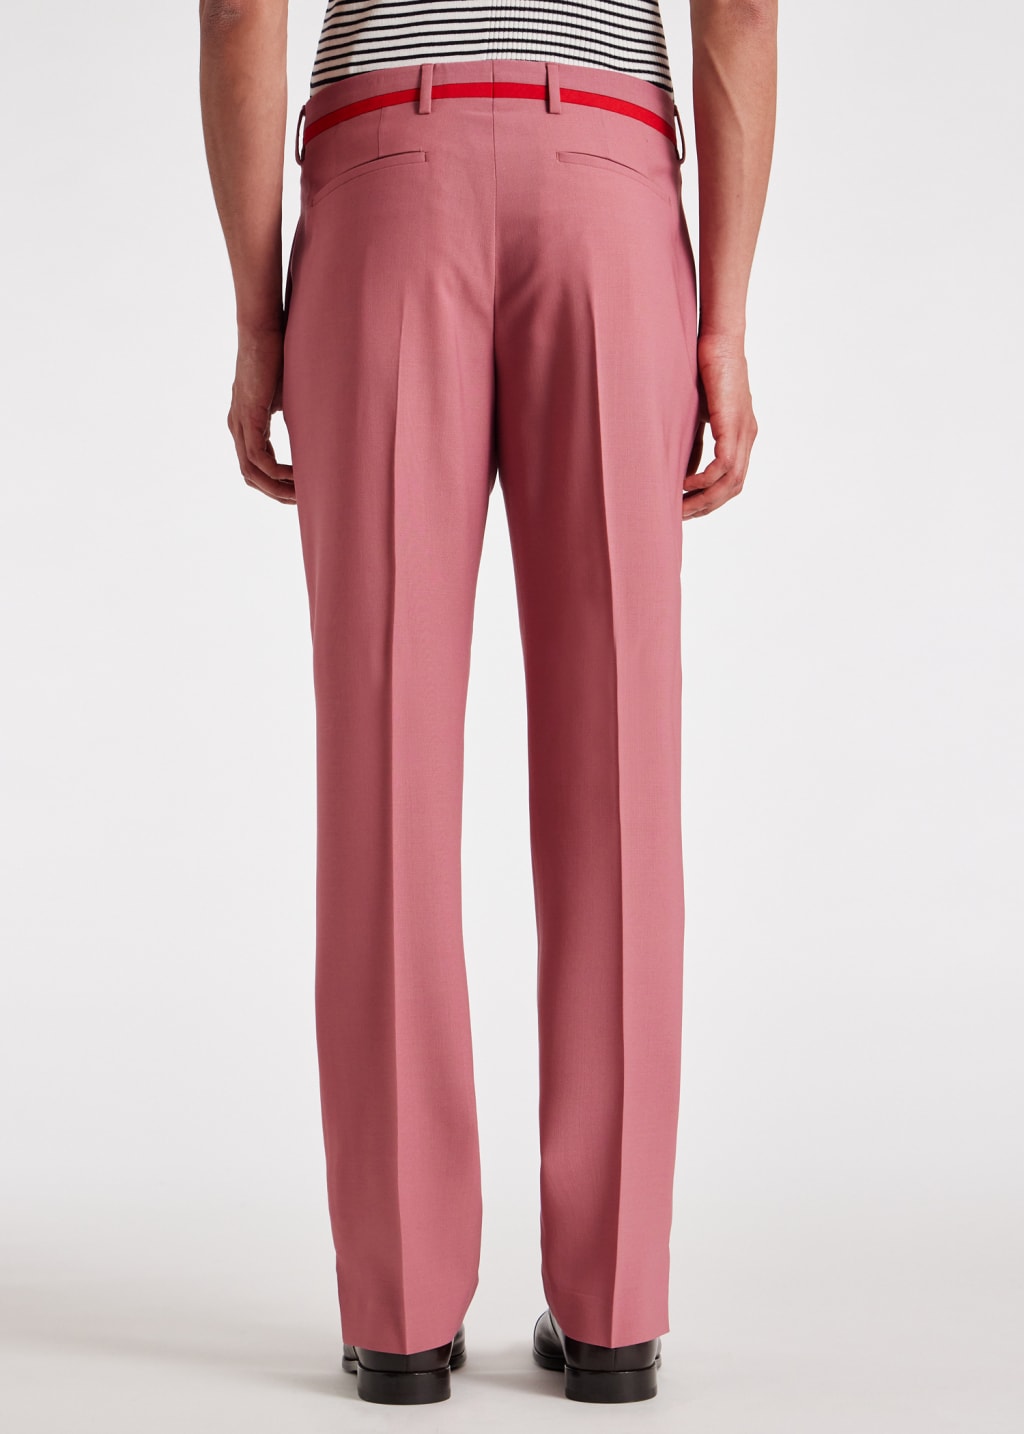 Model view - Pink Fresco Wool Trousers